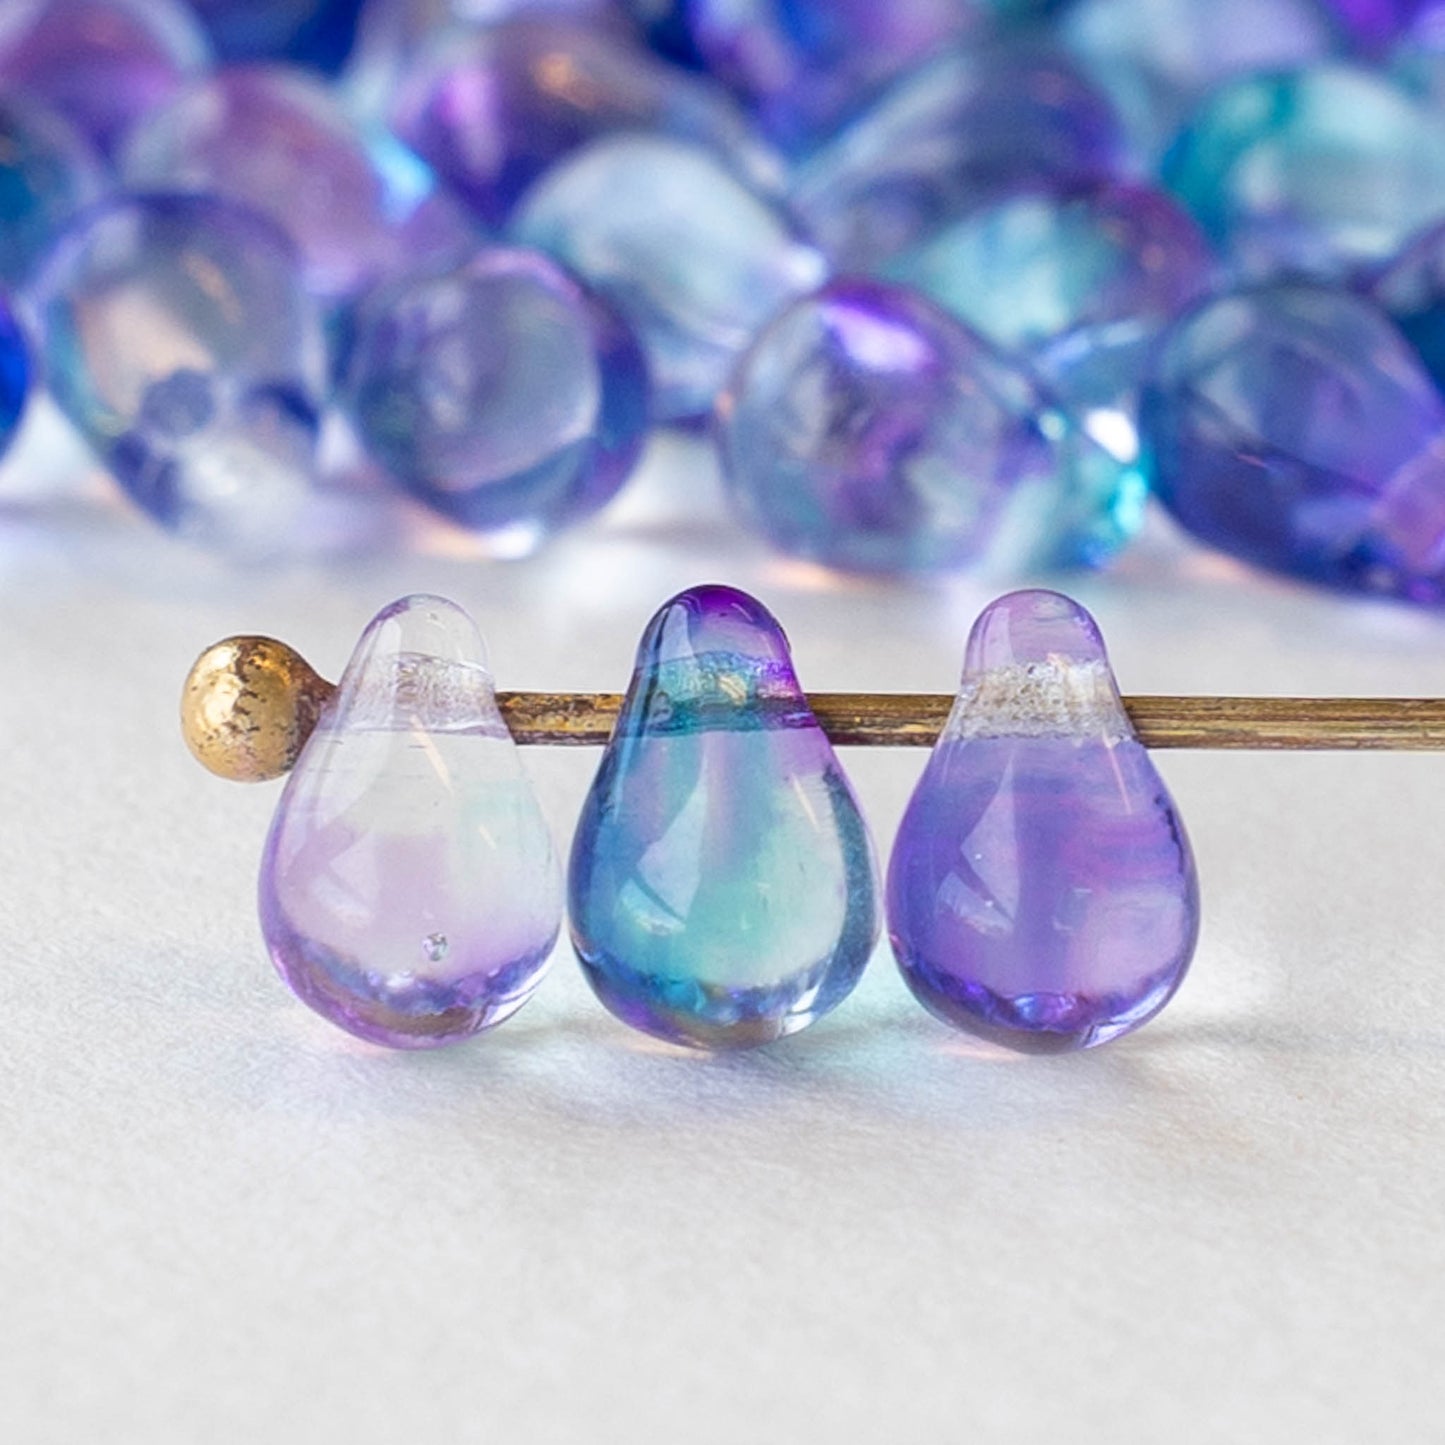 4x6mm Glass Teardrop Beads - Transparent Blue Lavender Mix - 100 Beads